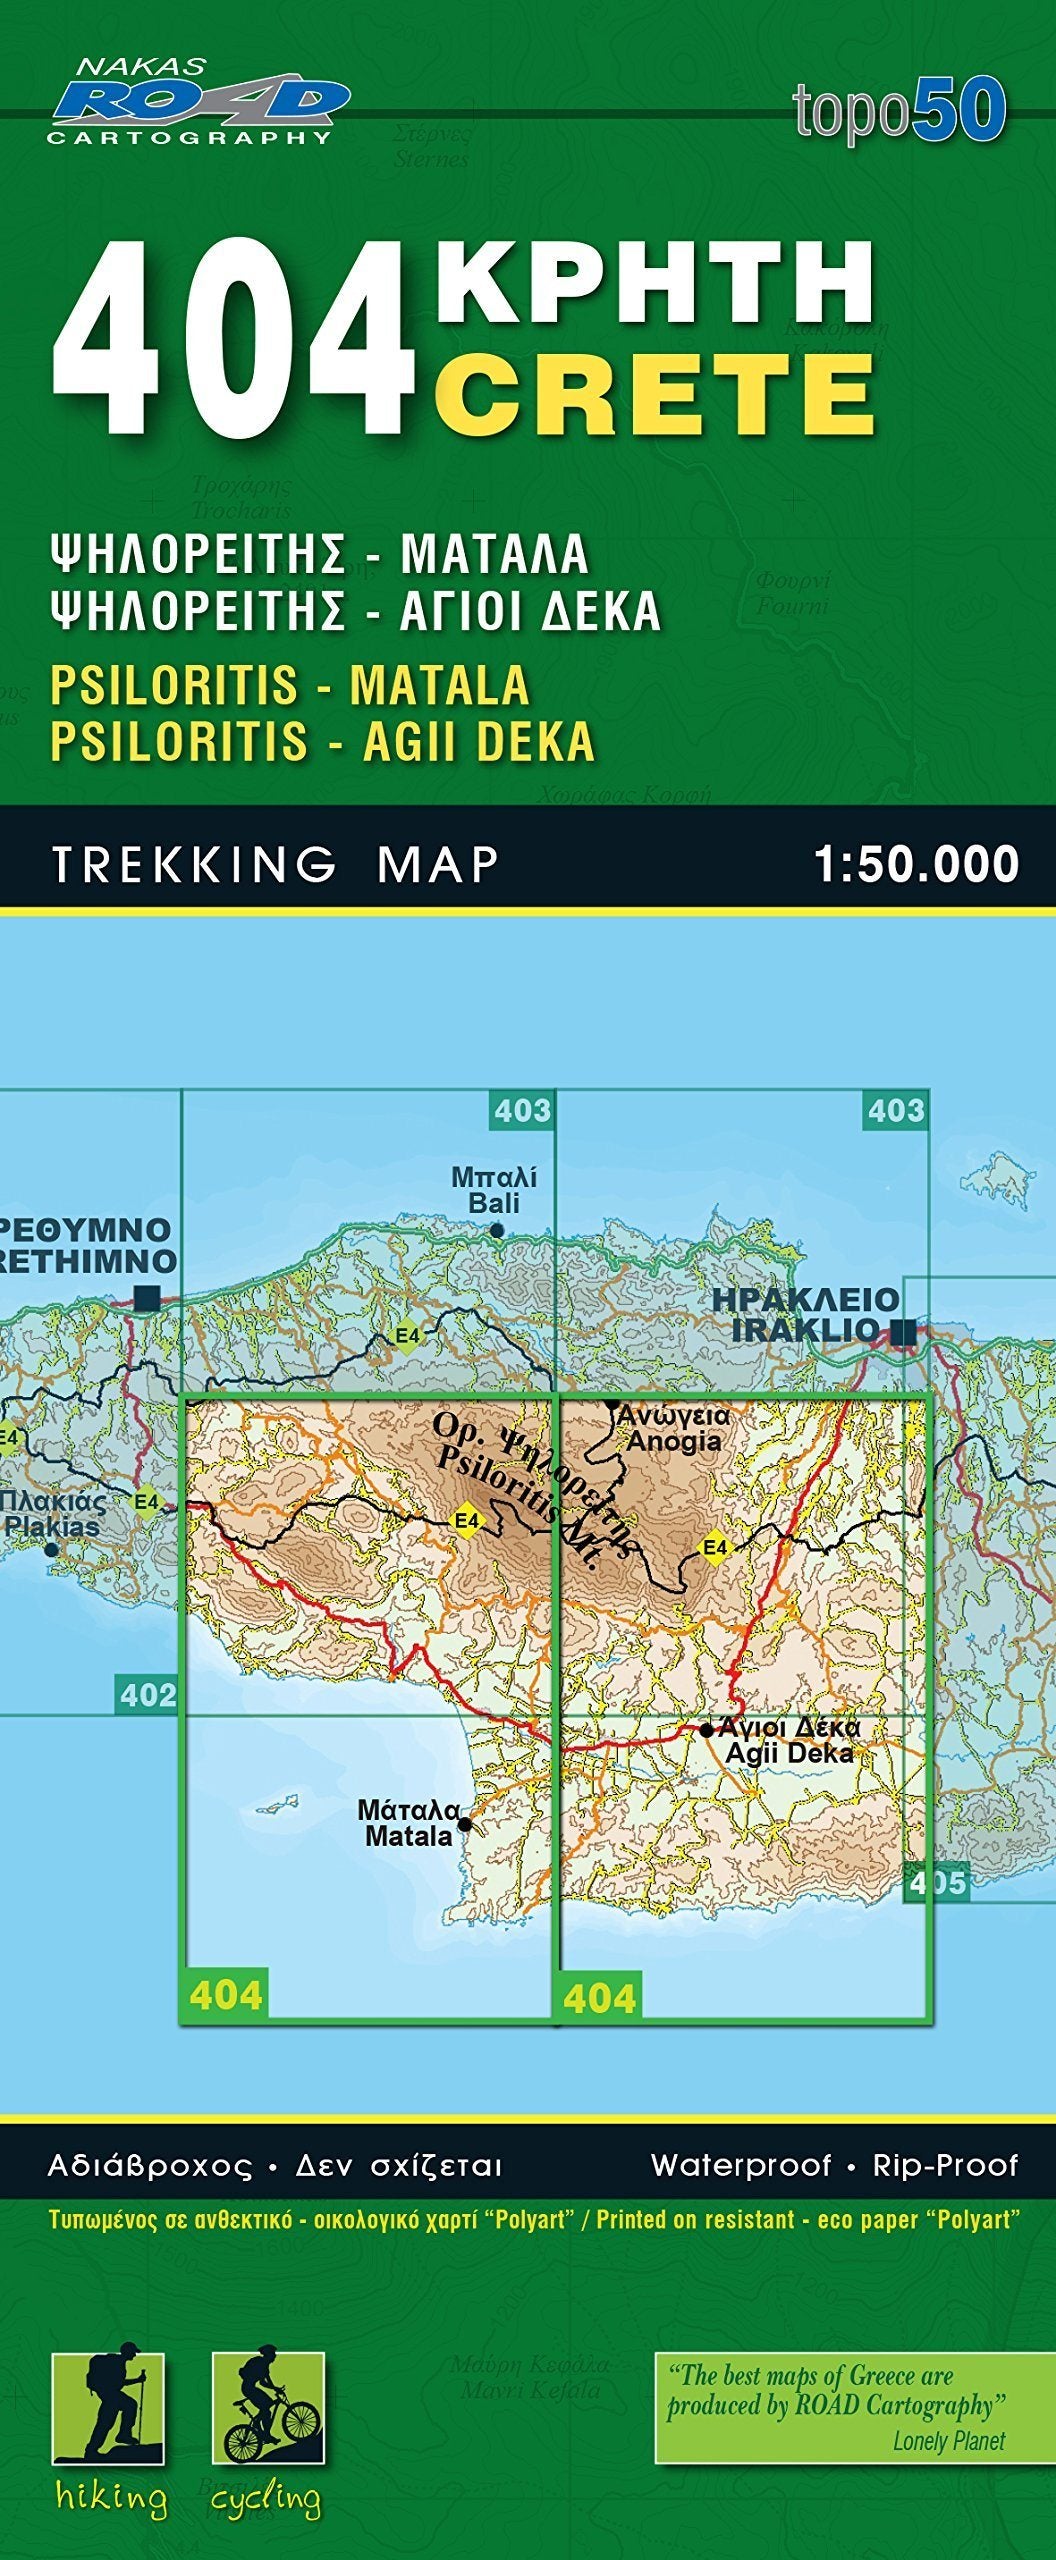 Carte de randonnée n° 404 - Crète : Psiloritis - Matala | Road Editions carte pliée Road Editions 